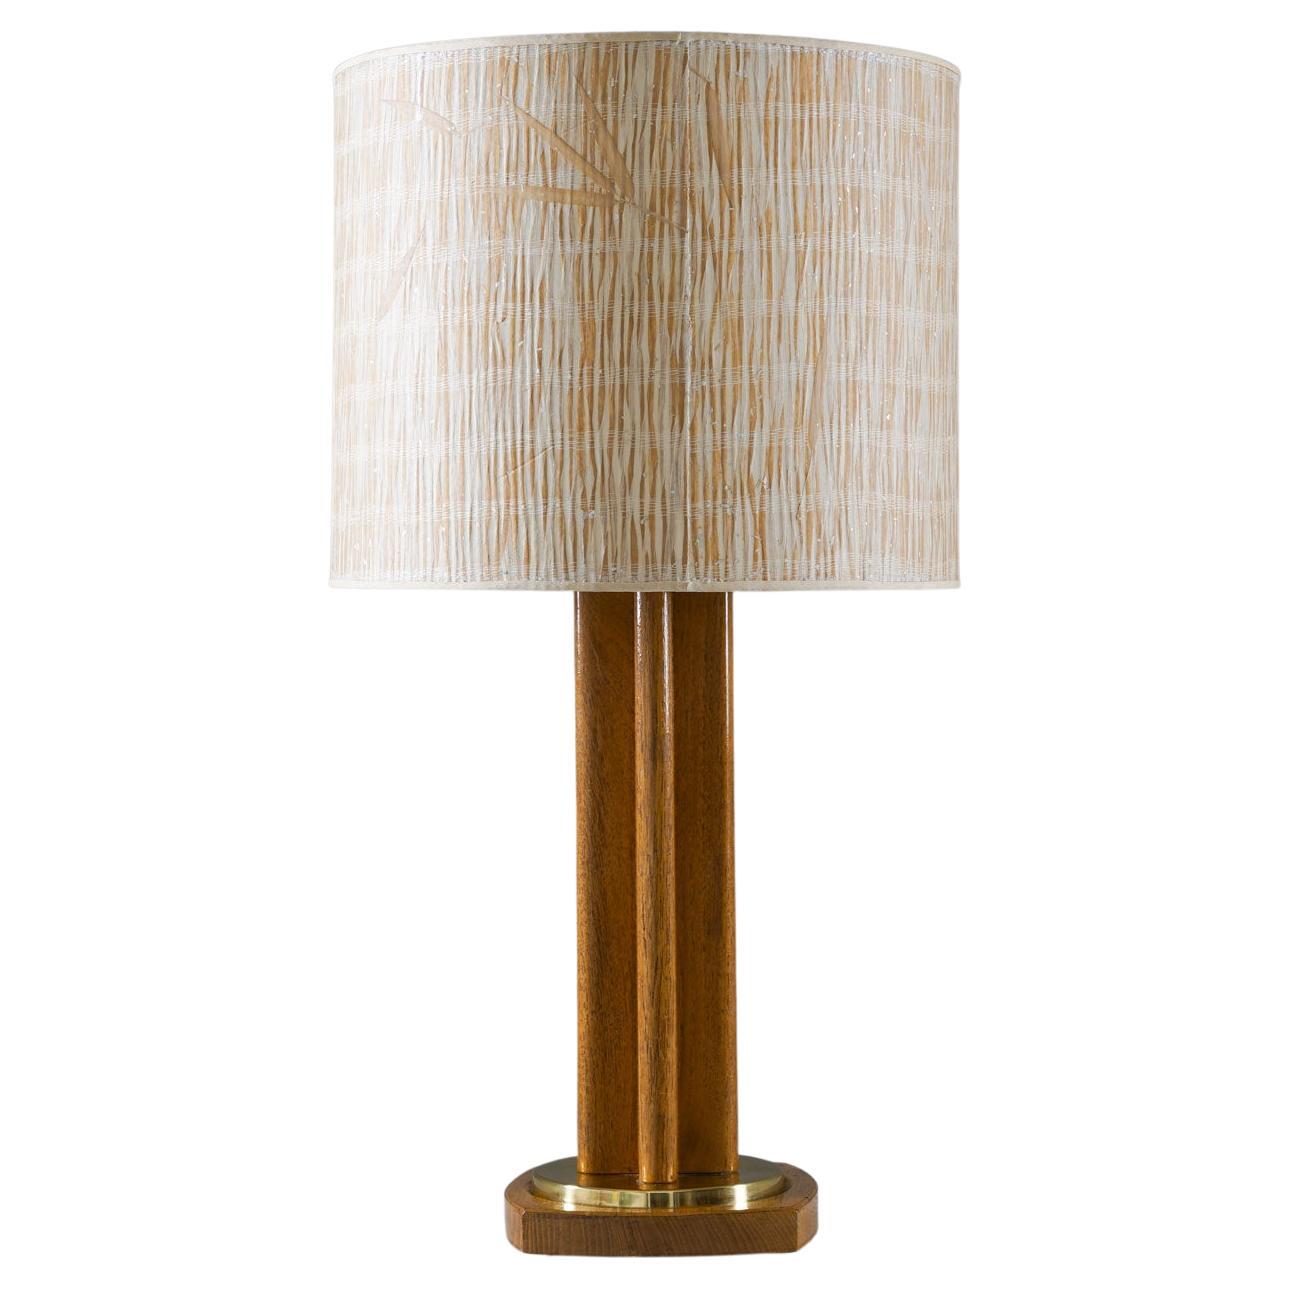 Scandinavian Midcentury Table Lamp in Oak and Brass by MAE, Sweden